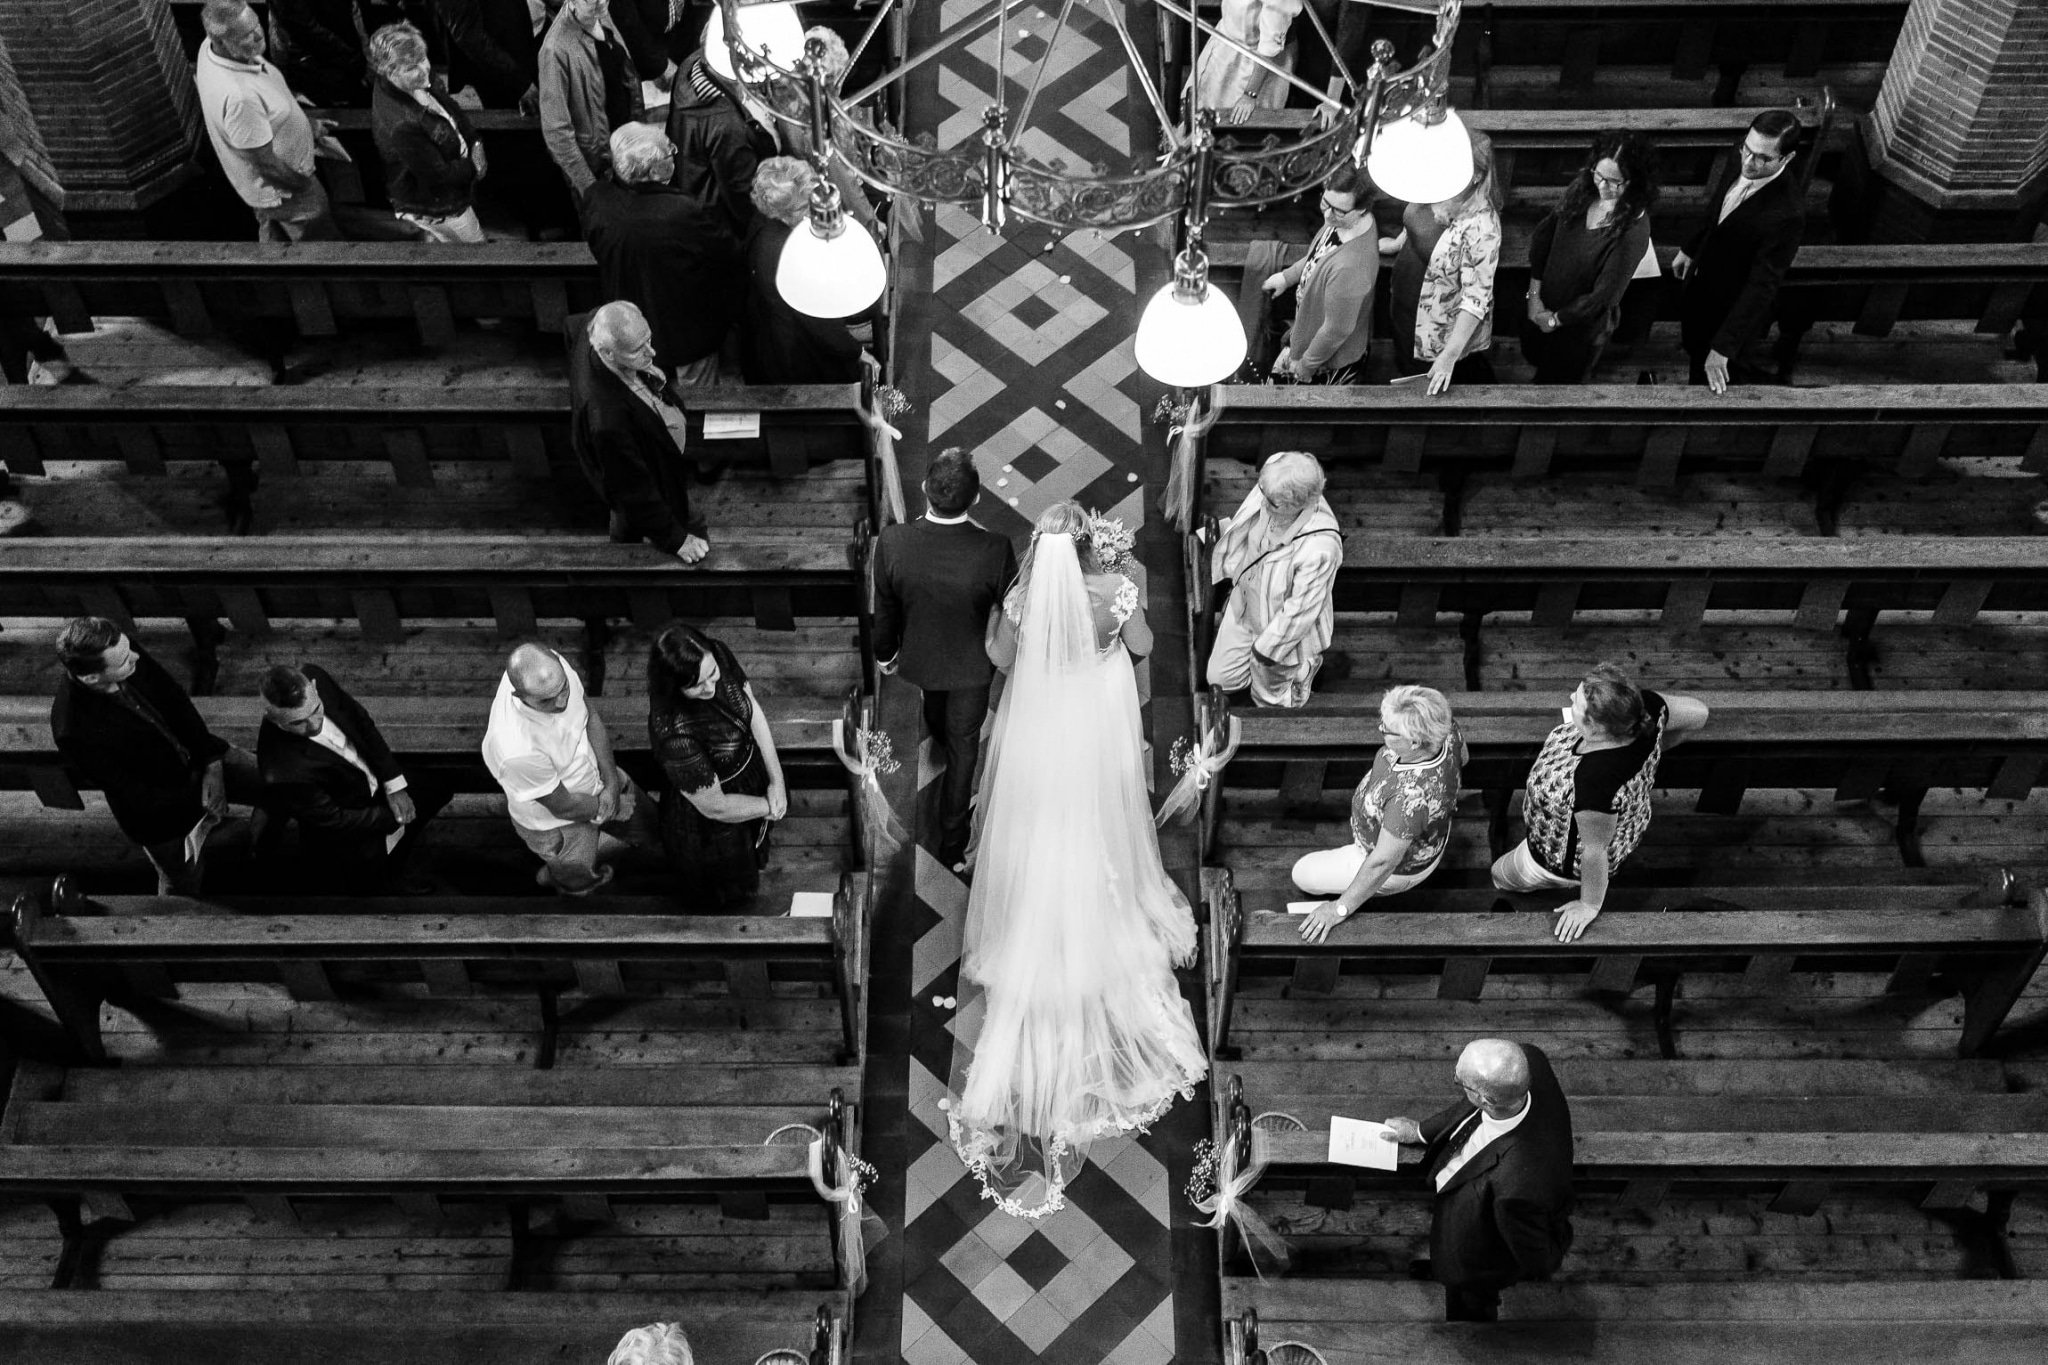 A bride and groom walk down the aisle in a church.